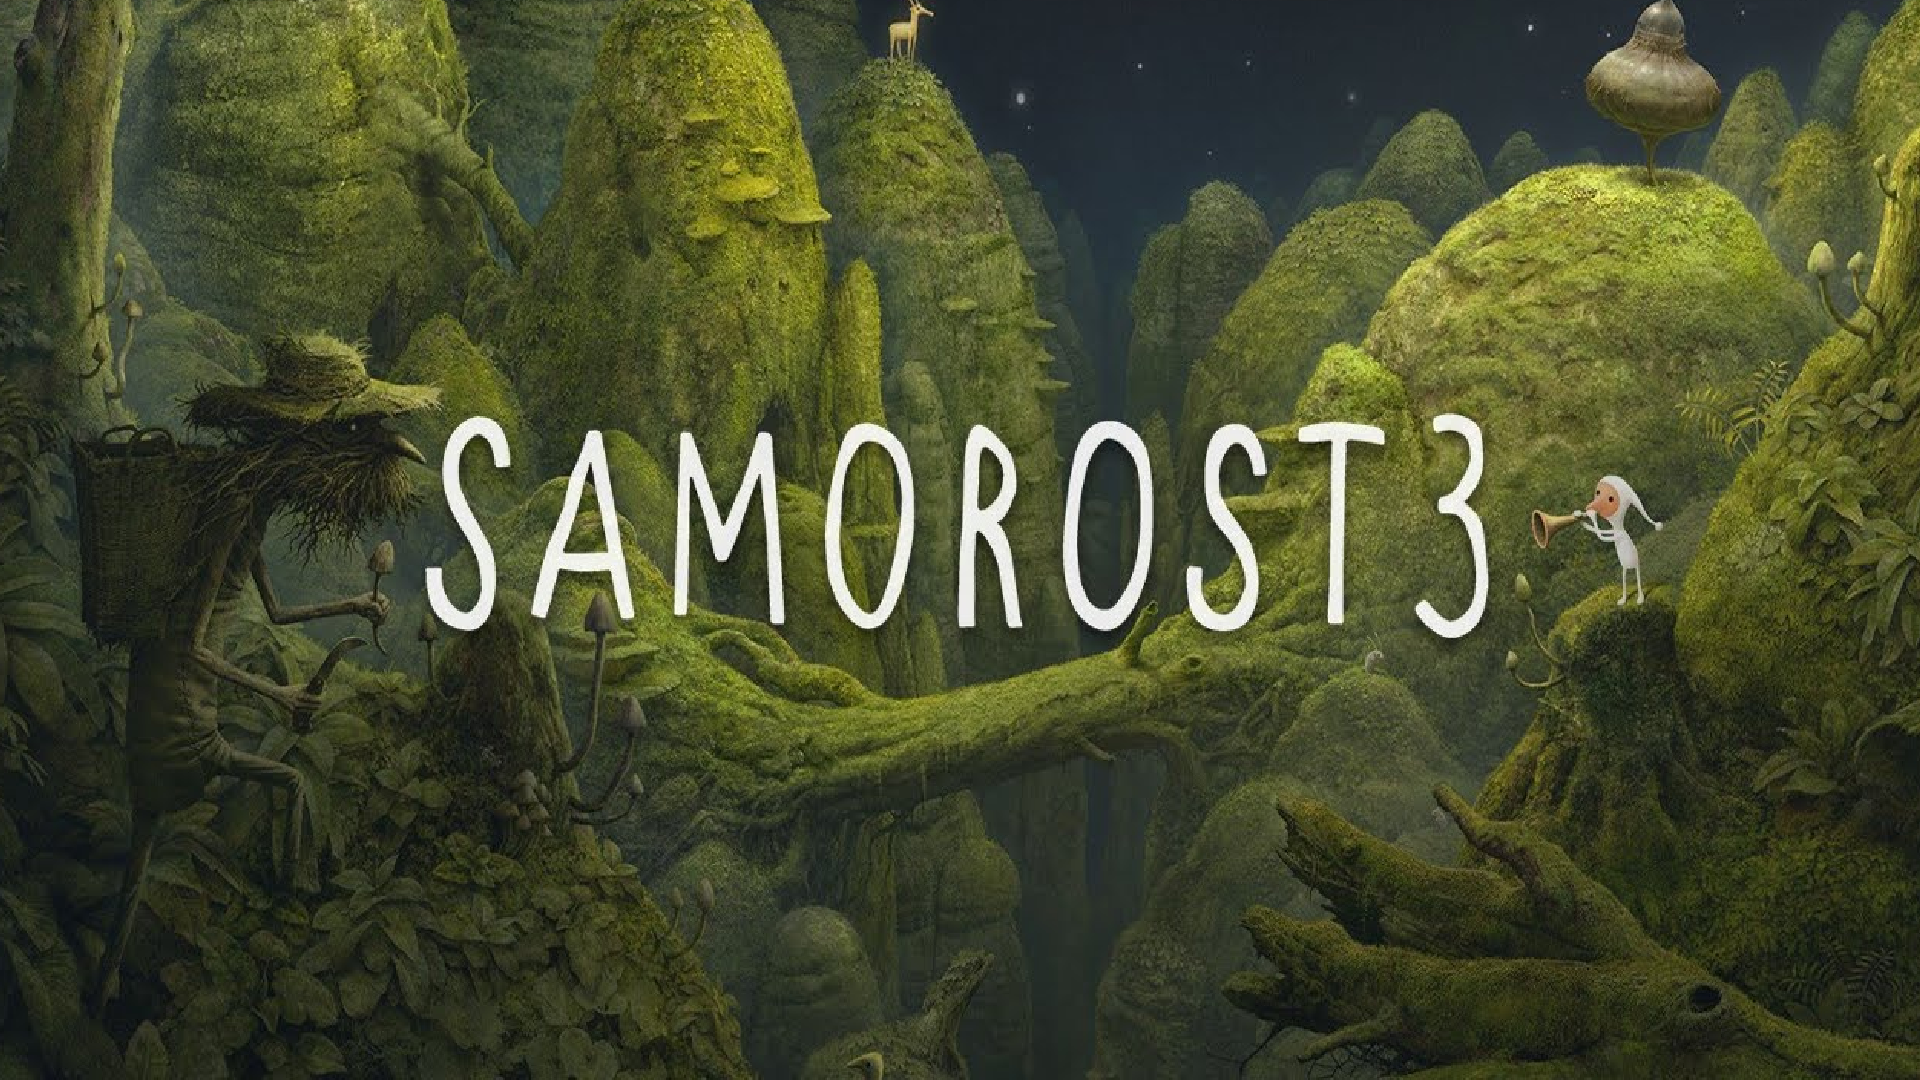 Banner of समोरोस्त 3 